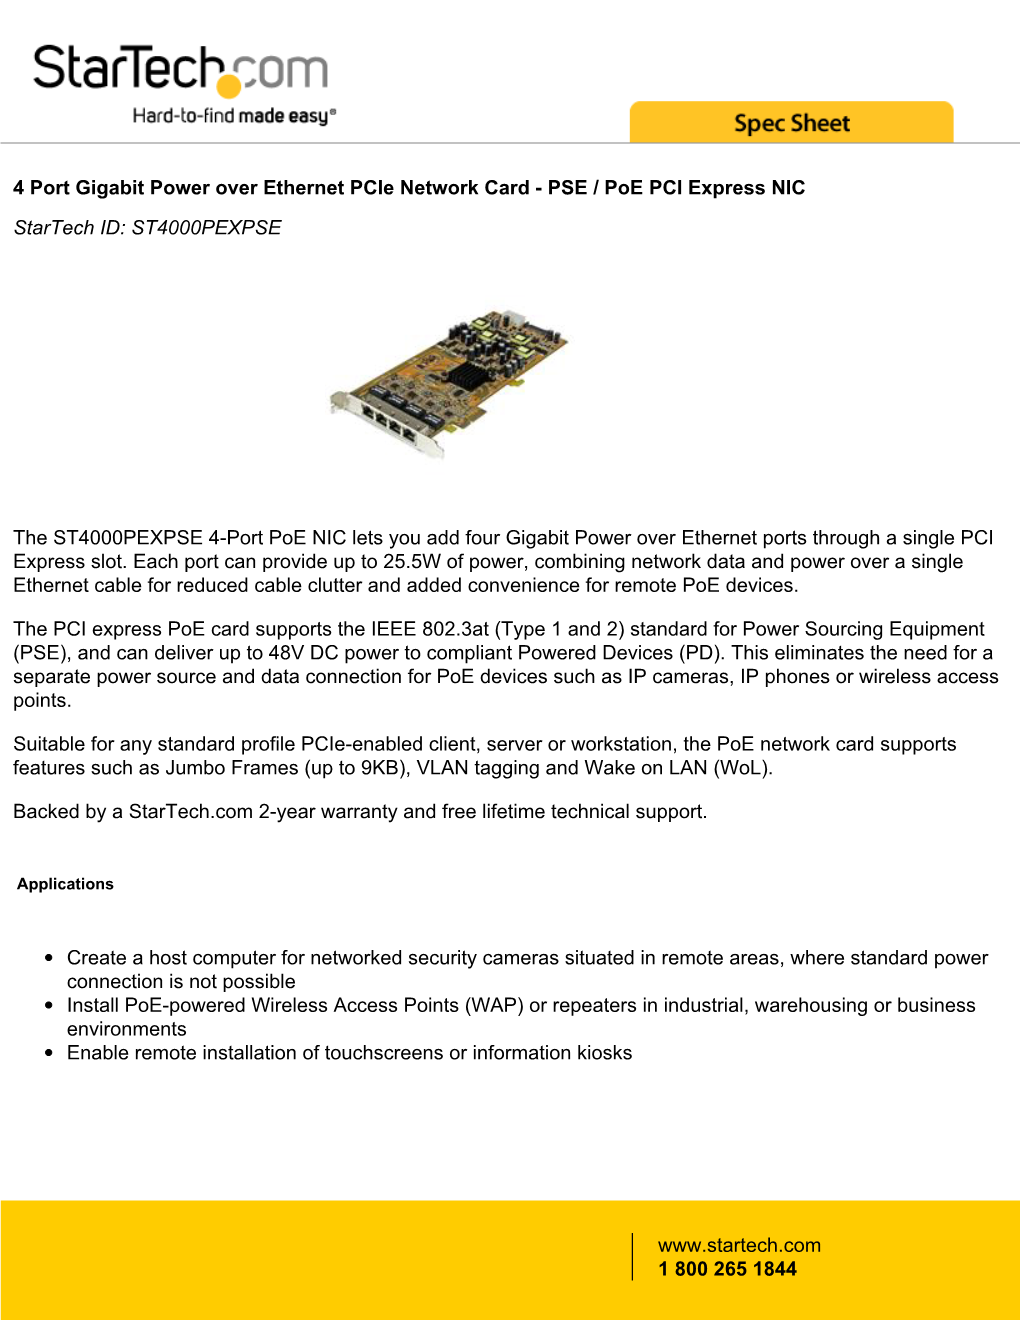 4 Port Gigabit Power Over Ethernet Pcie Network Card - PSE / Poe PCI Express NIC Startech ID: ST4000PEXPSE